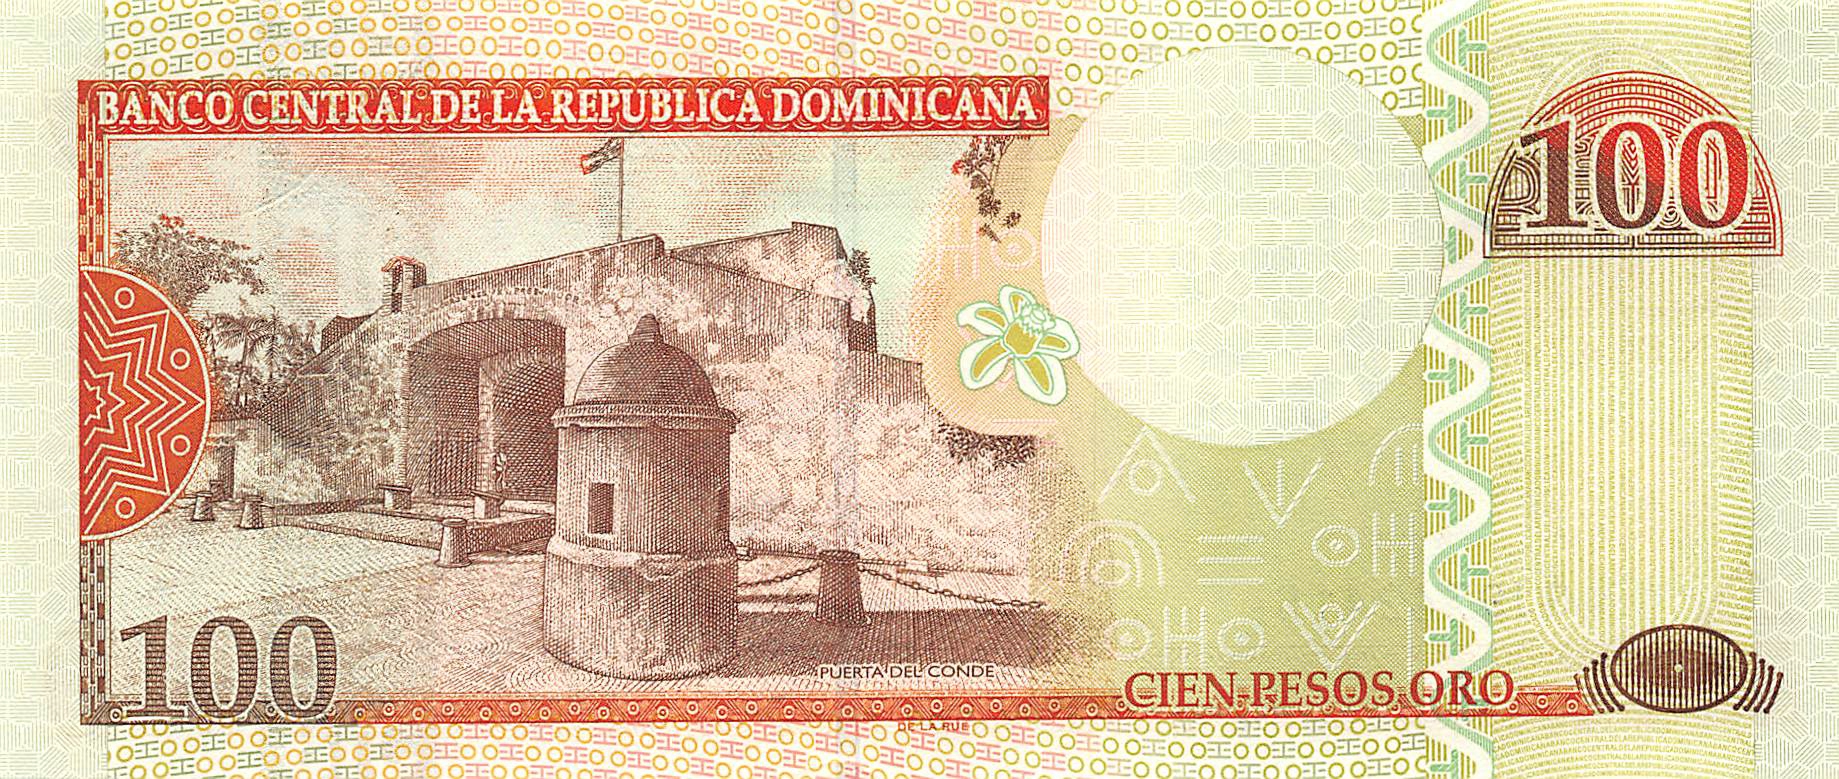 DOMINICAN REPUBLIC BANKNOTE P170c  50 PESOS ORO 2003 UNC PREFIX CY 